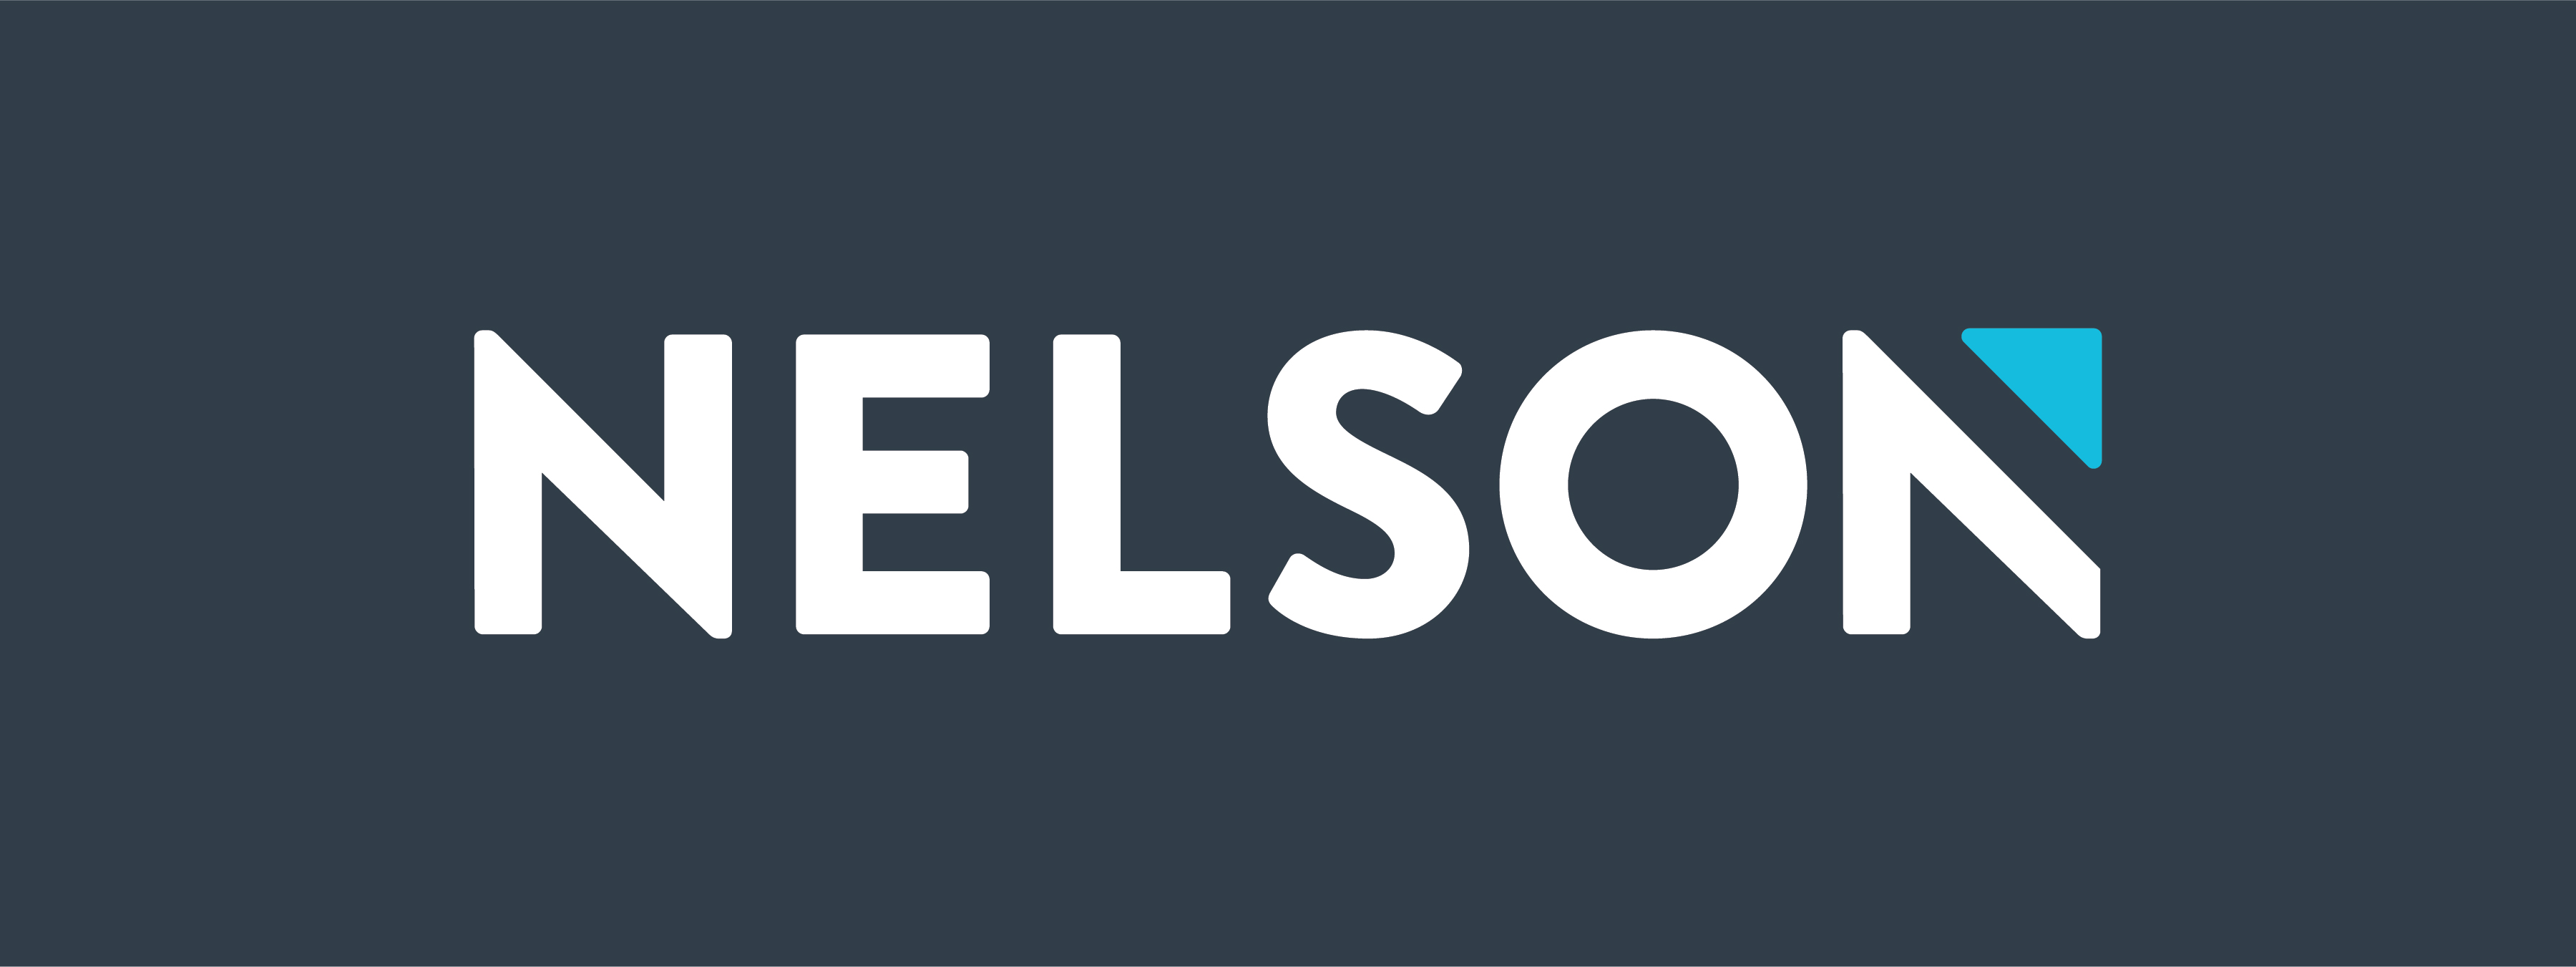 Denver Premium Outlets - NELSON Worldwide